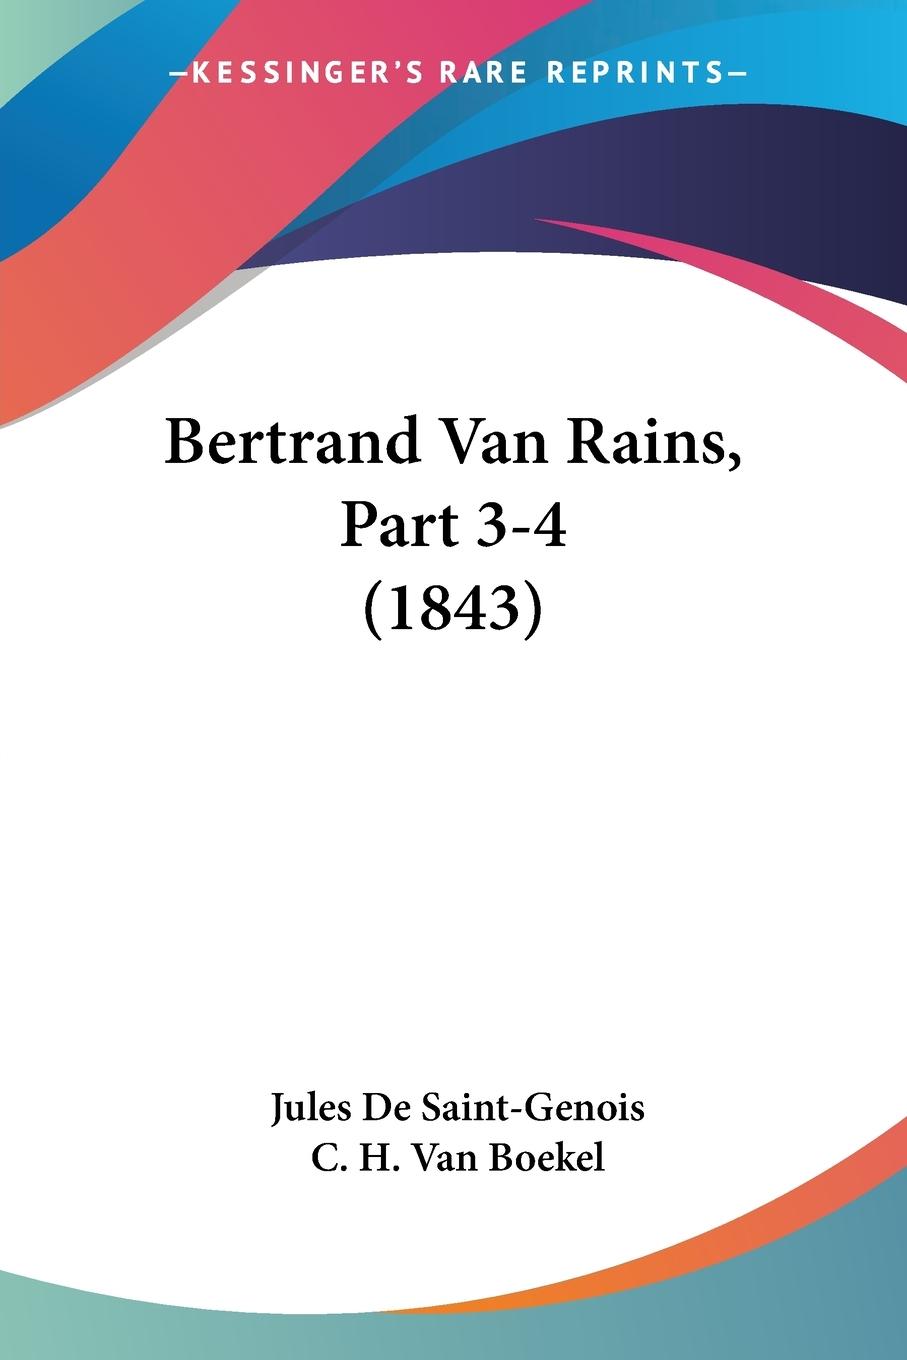 Bertrand Van Rains, Part 3-4 (1843) - De Saint-Genois, Jules Boekel, C. H. van